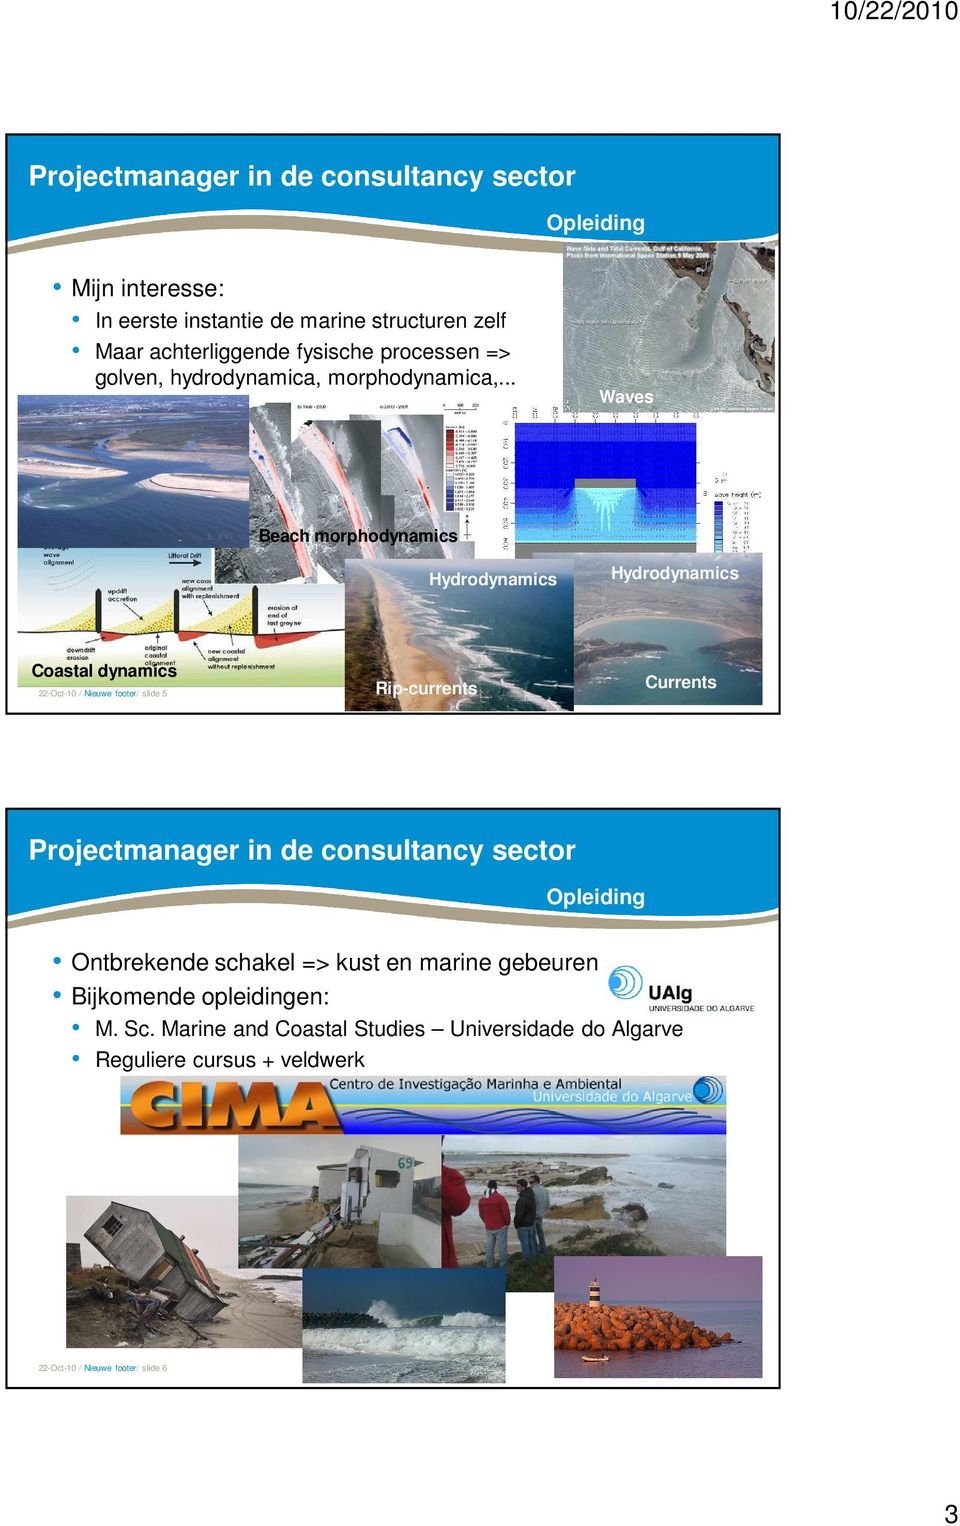 .. Waves Beach morphodynamics Hydrodynamics Hydrodynamics Coastal dynamics 22-Oct-10 / Nieuwe footer/ slide 5